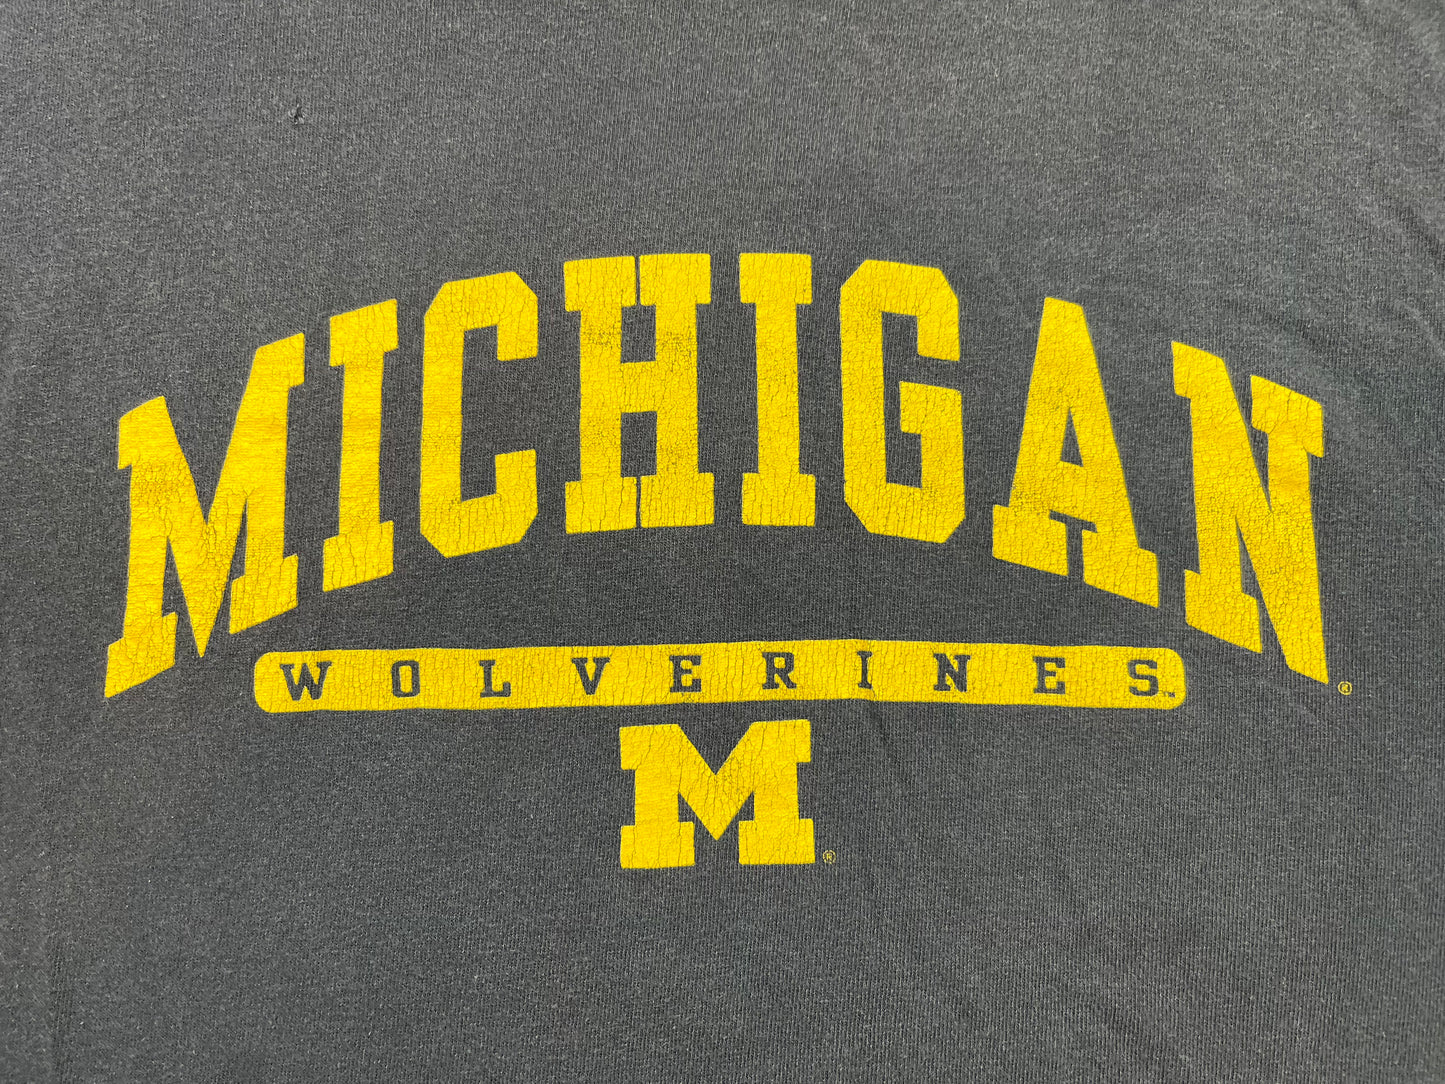 Michigan Script T-Shirt